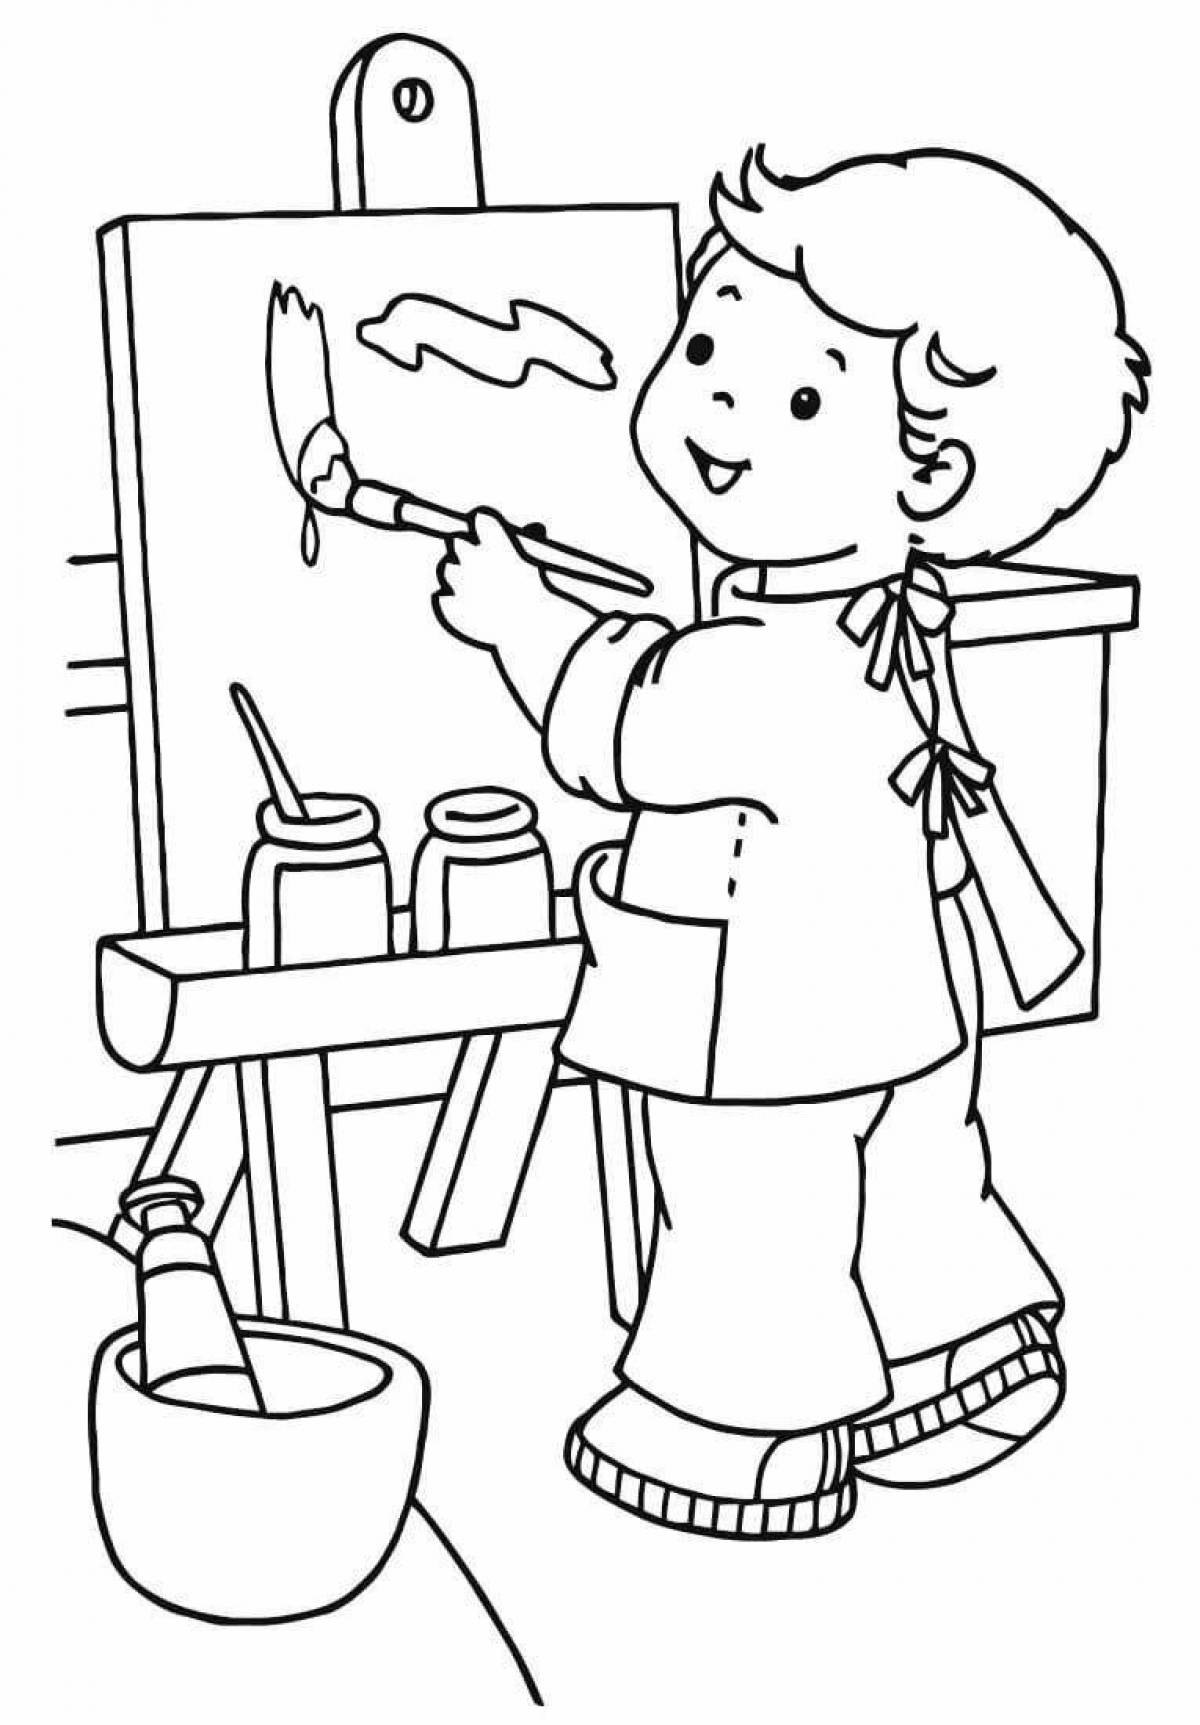 Professions for preschoolers #4